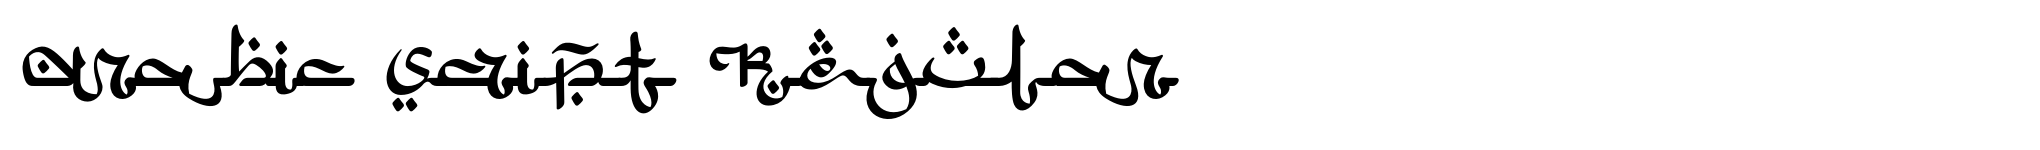 Arabic Script Regular image